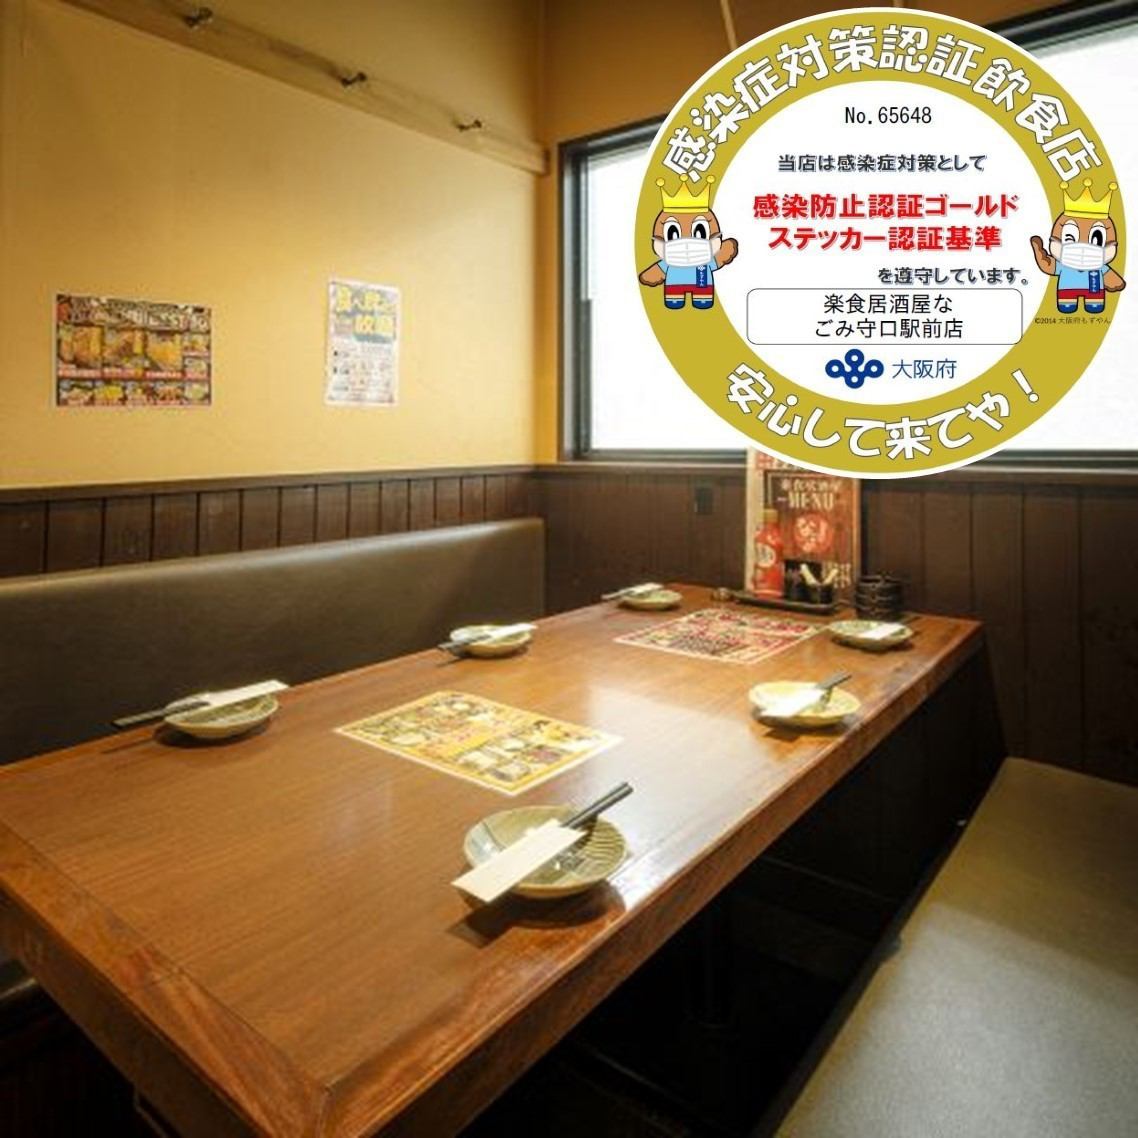 Nagomi派对套餐3,000日元♪最适合各种宴会！